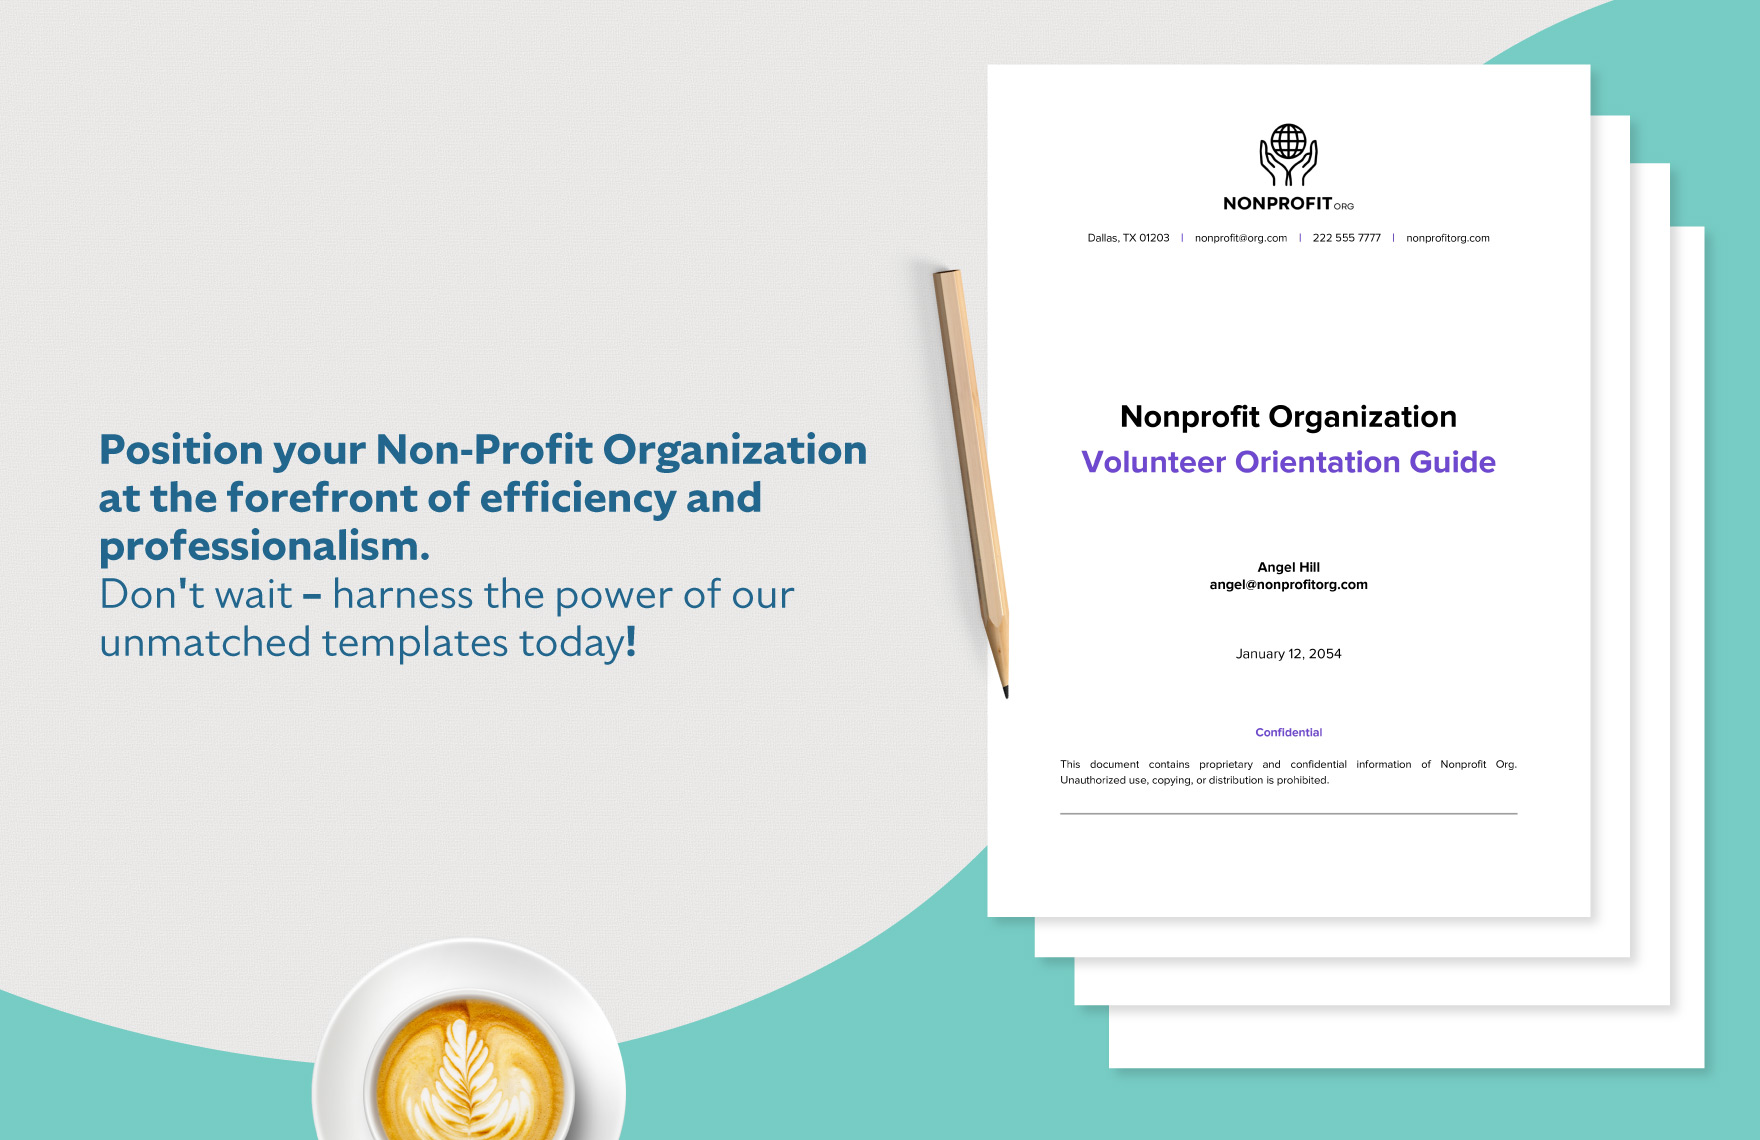 Nonprofit Organization Volunteer Orientation Guide Template